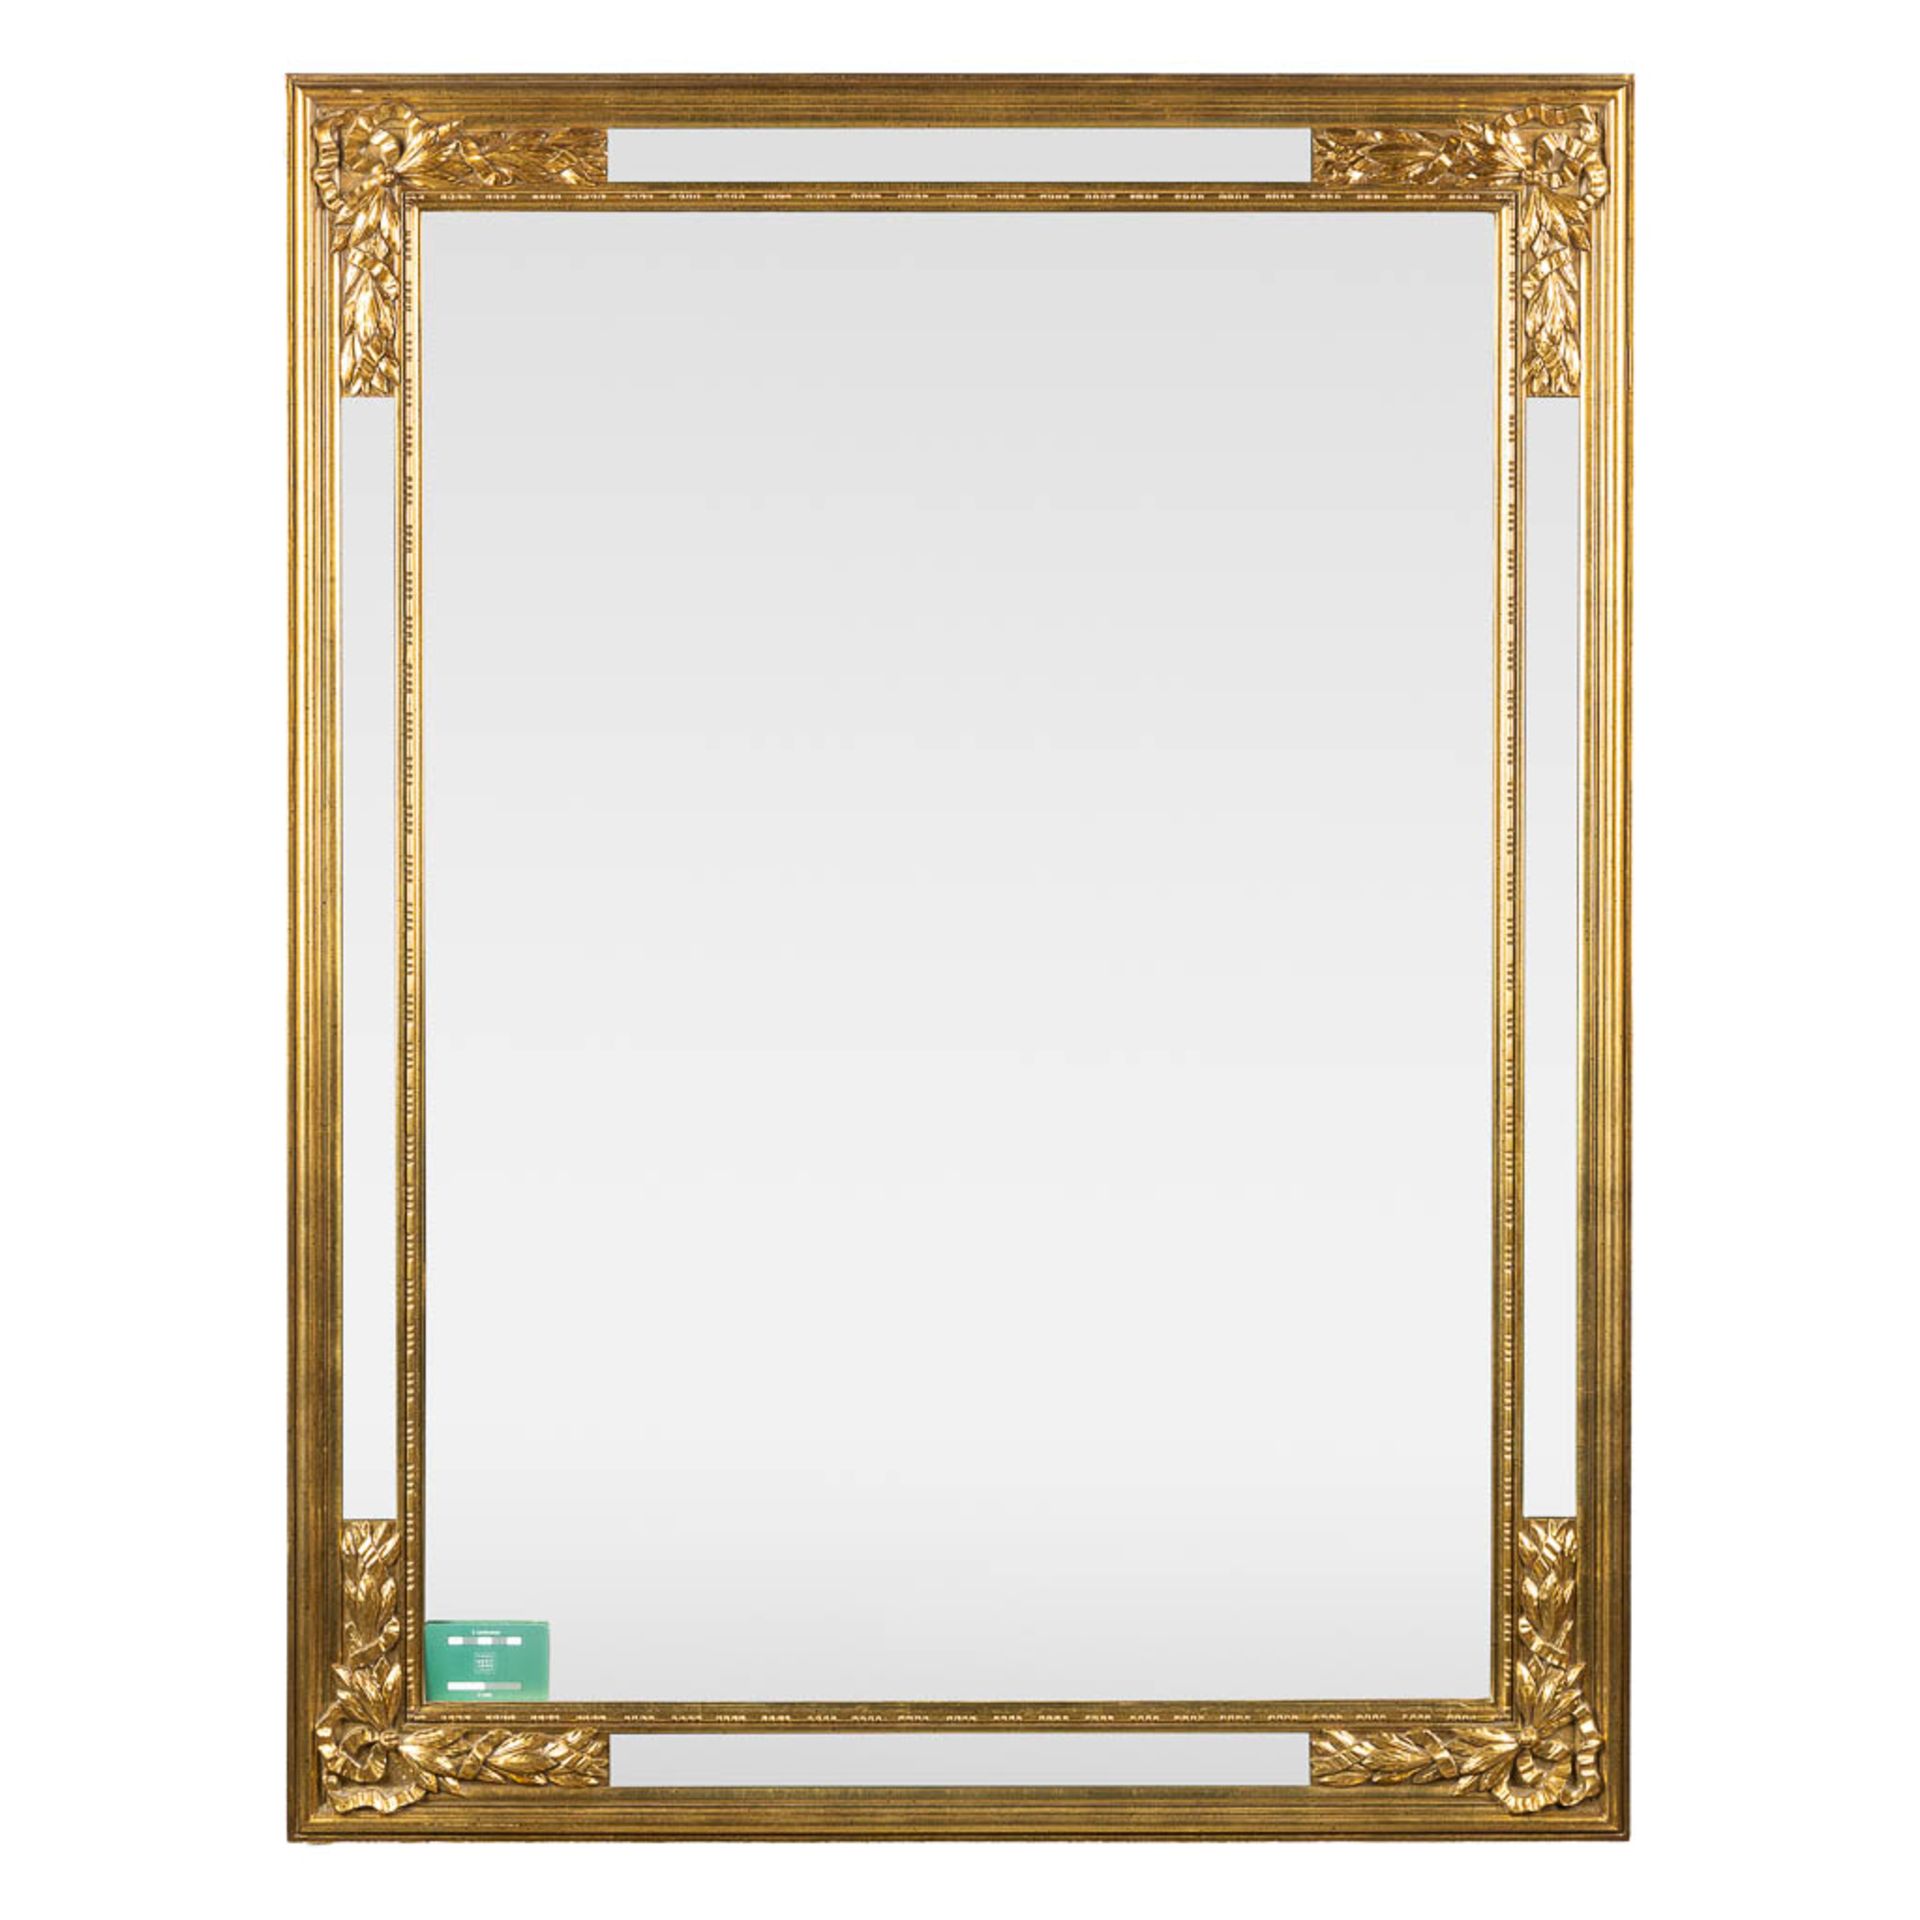 Deknudt, two large rectangular mirrors. Gilt wood. (W:128 x H:90 cm) - Image 2 of 10